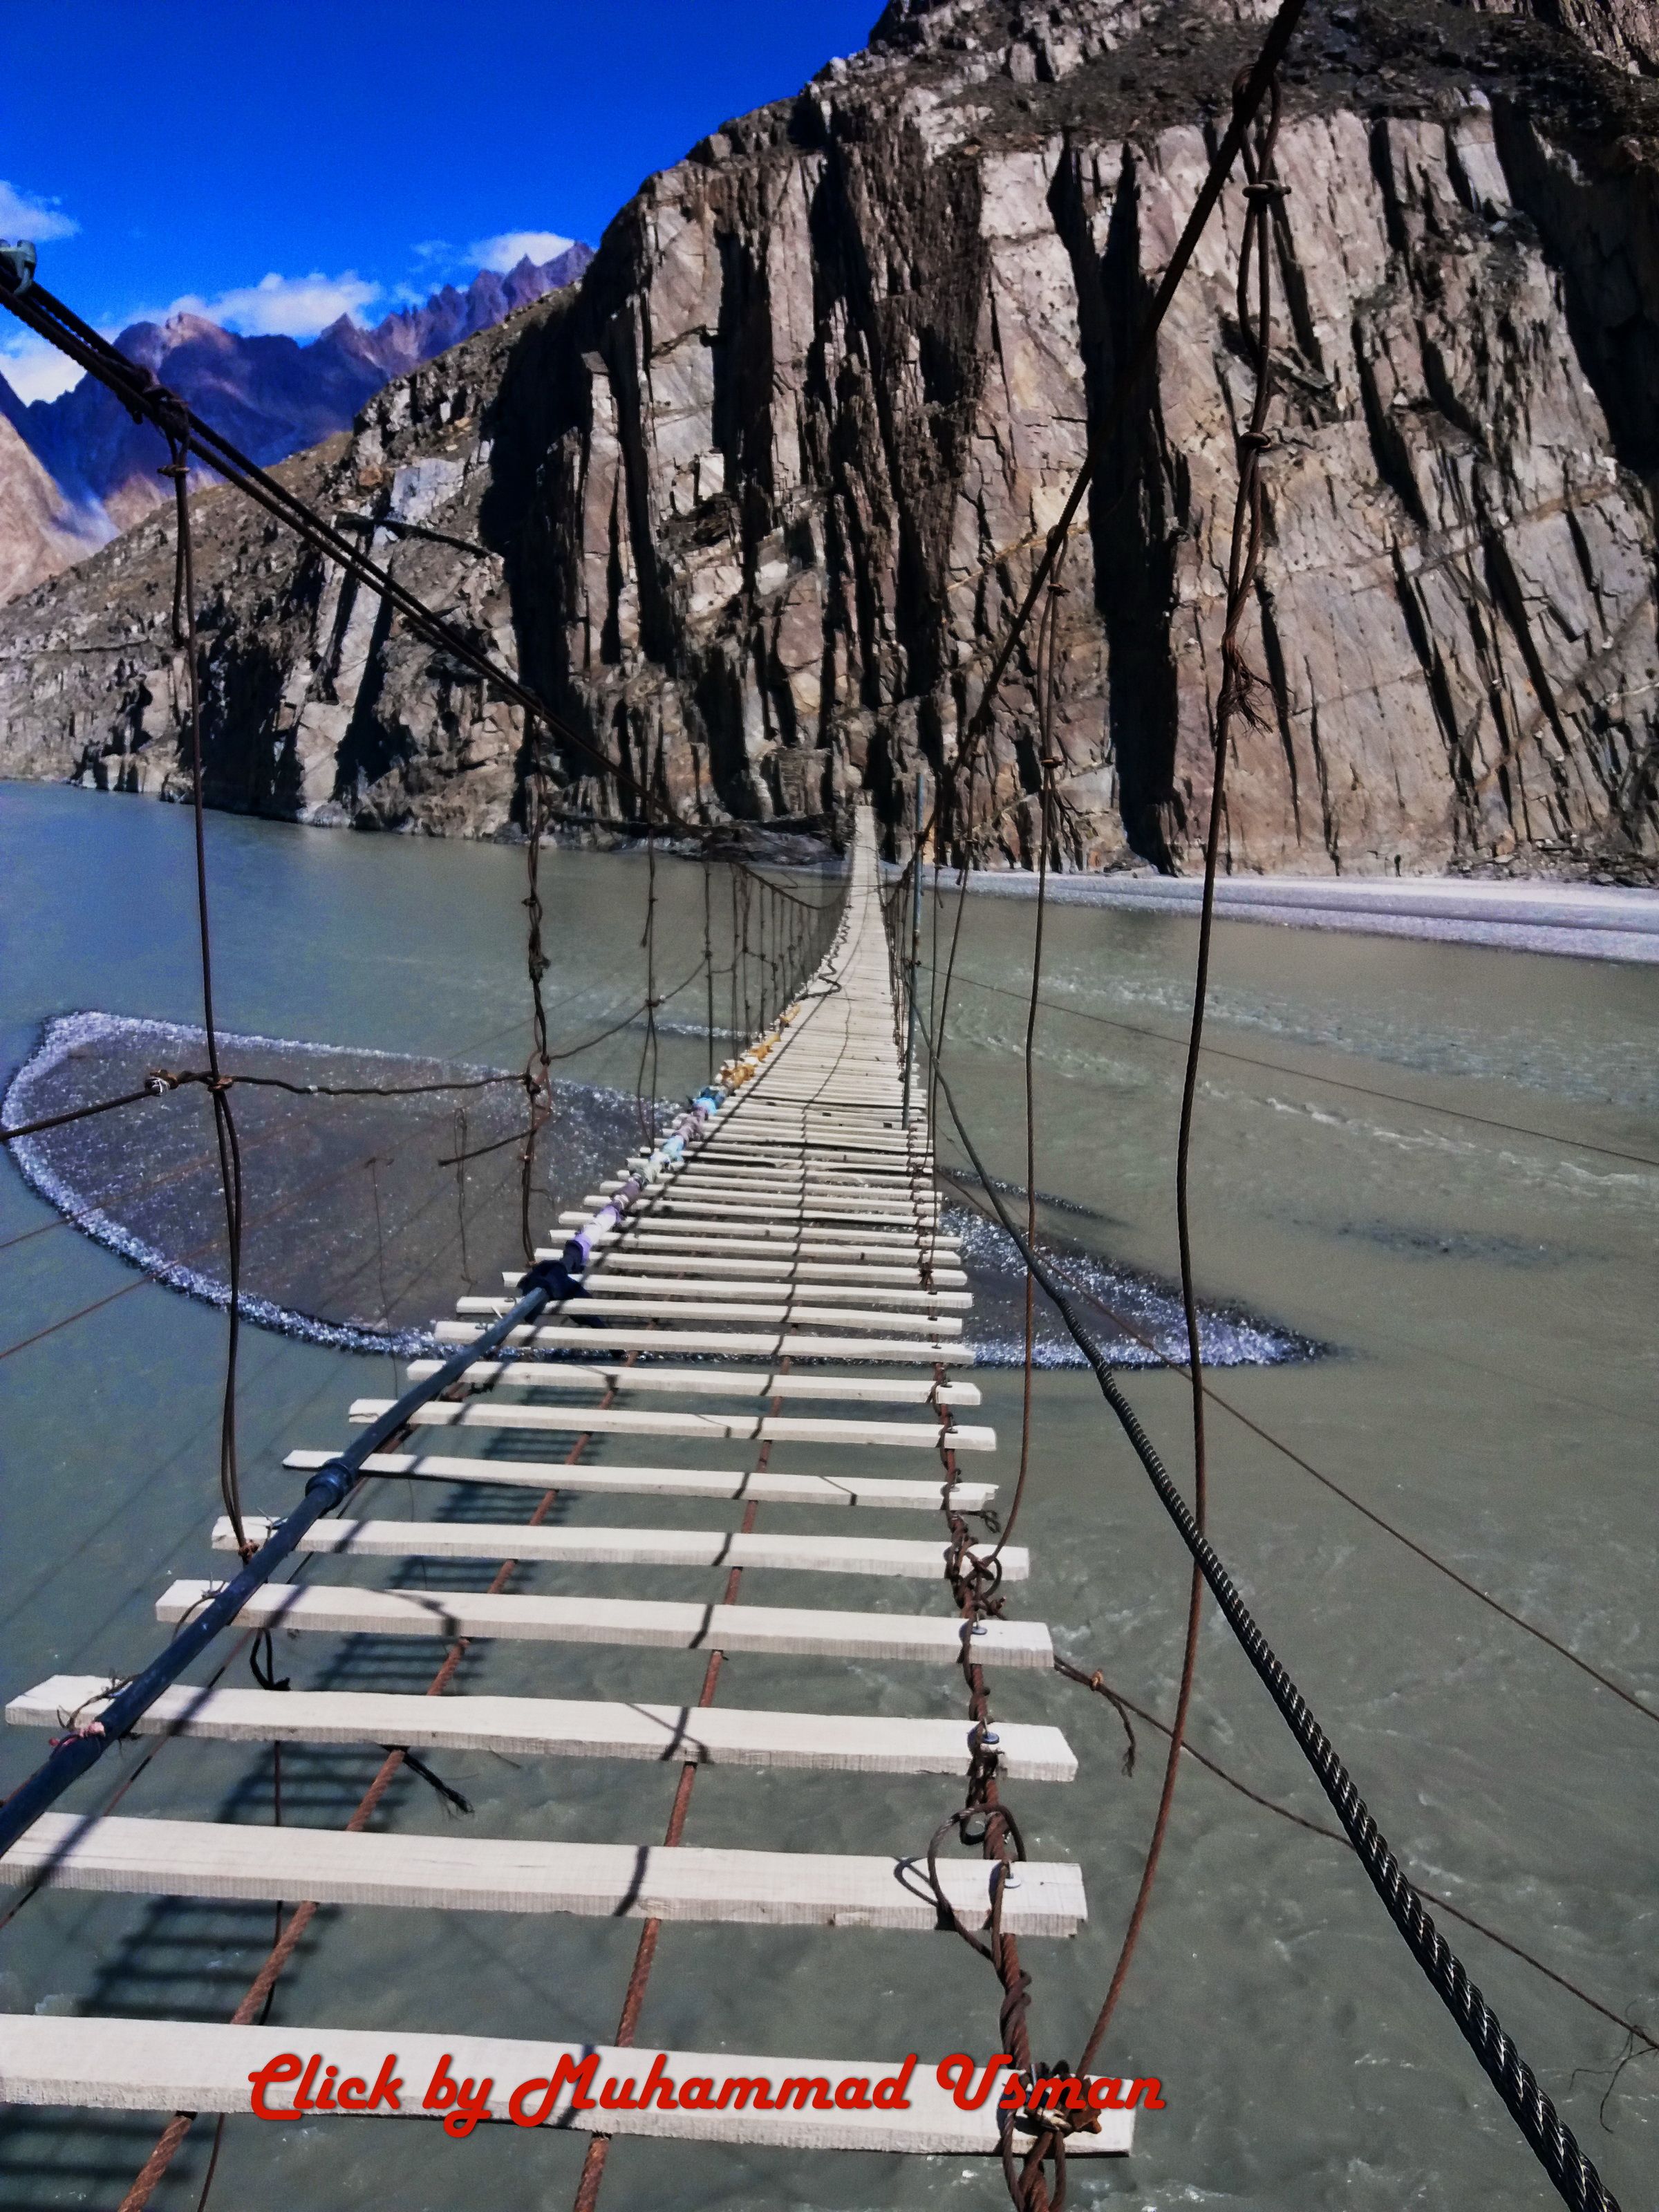 Husseini Bridge Hunza is one of the most dangerous bridges in the world